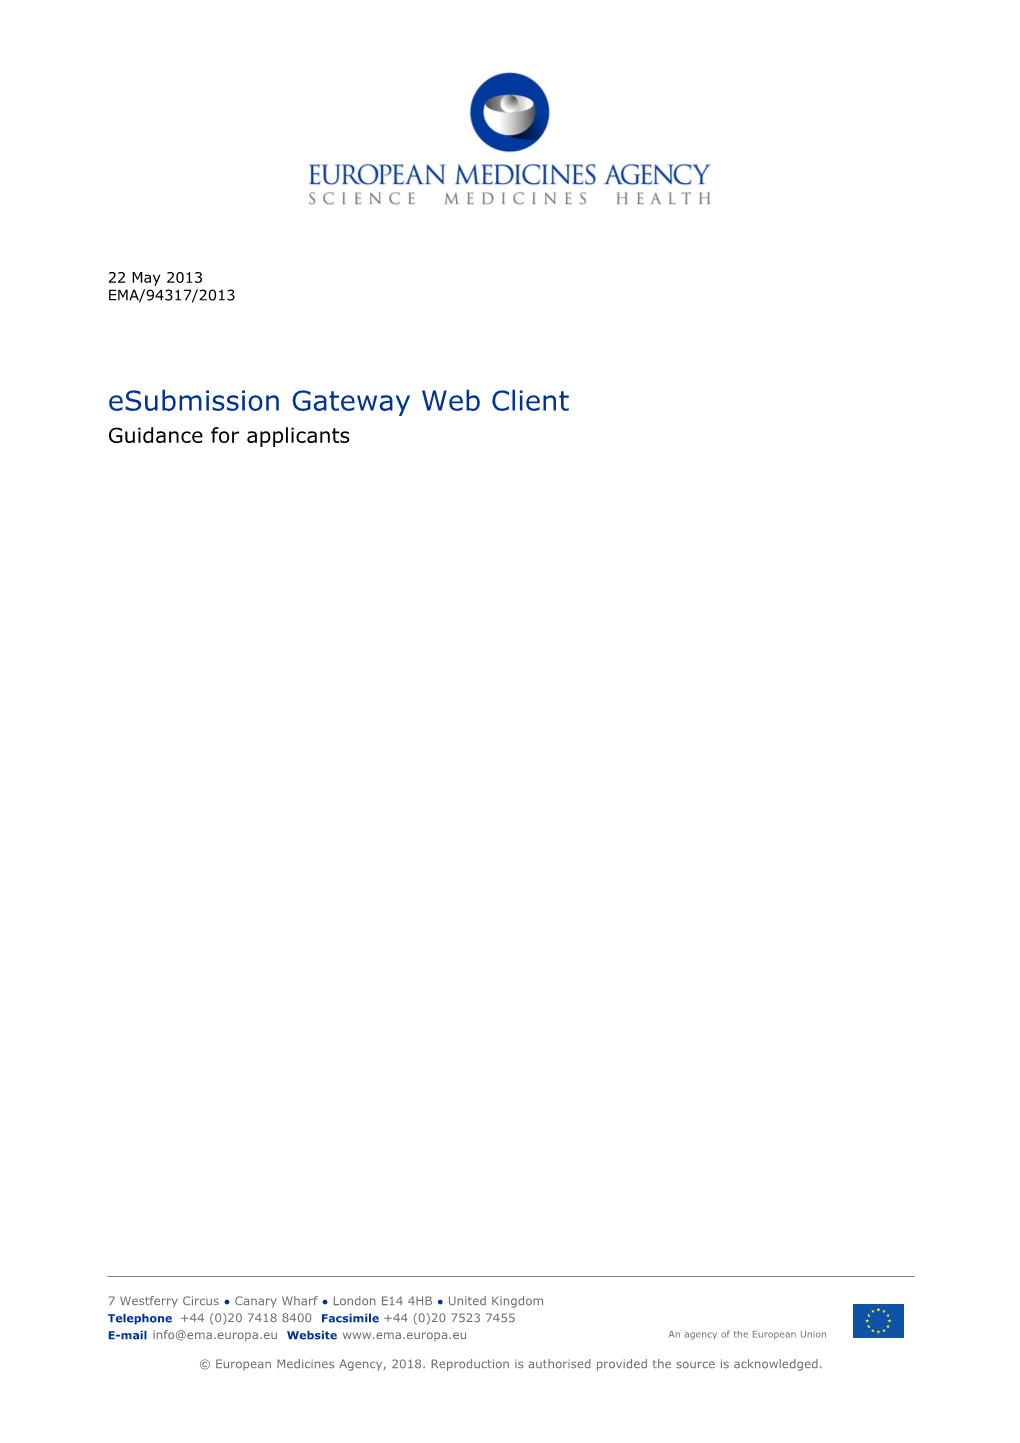 Q&A for EMA Gateway Web Client